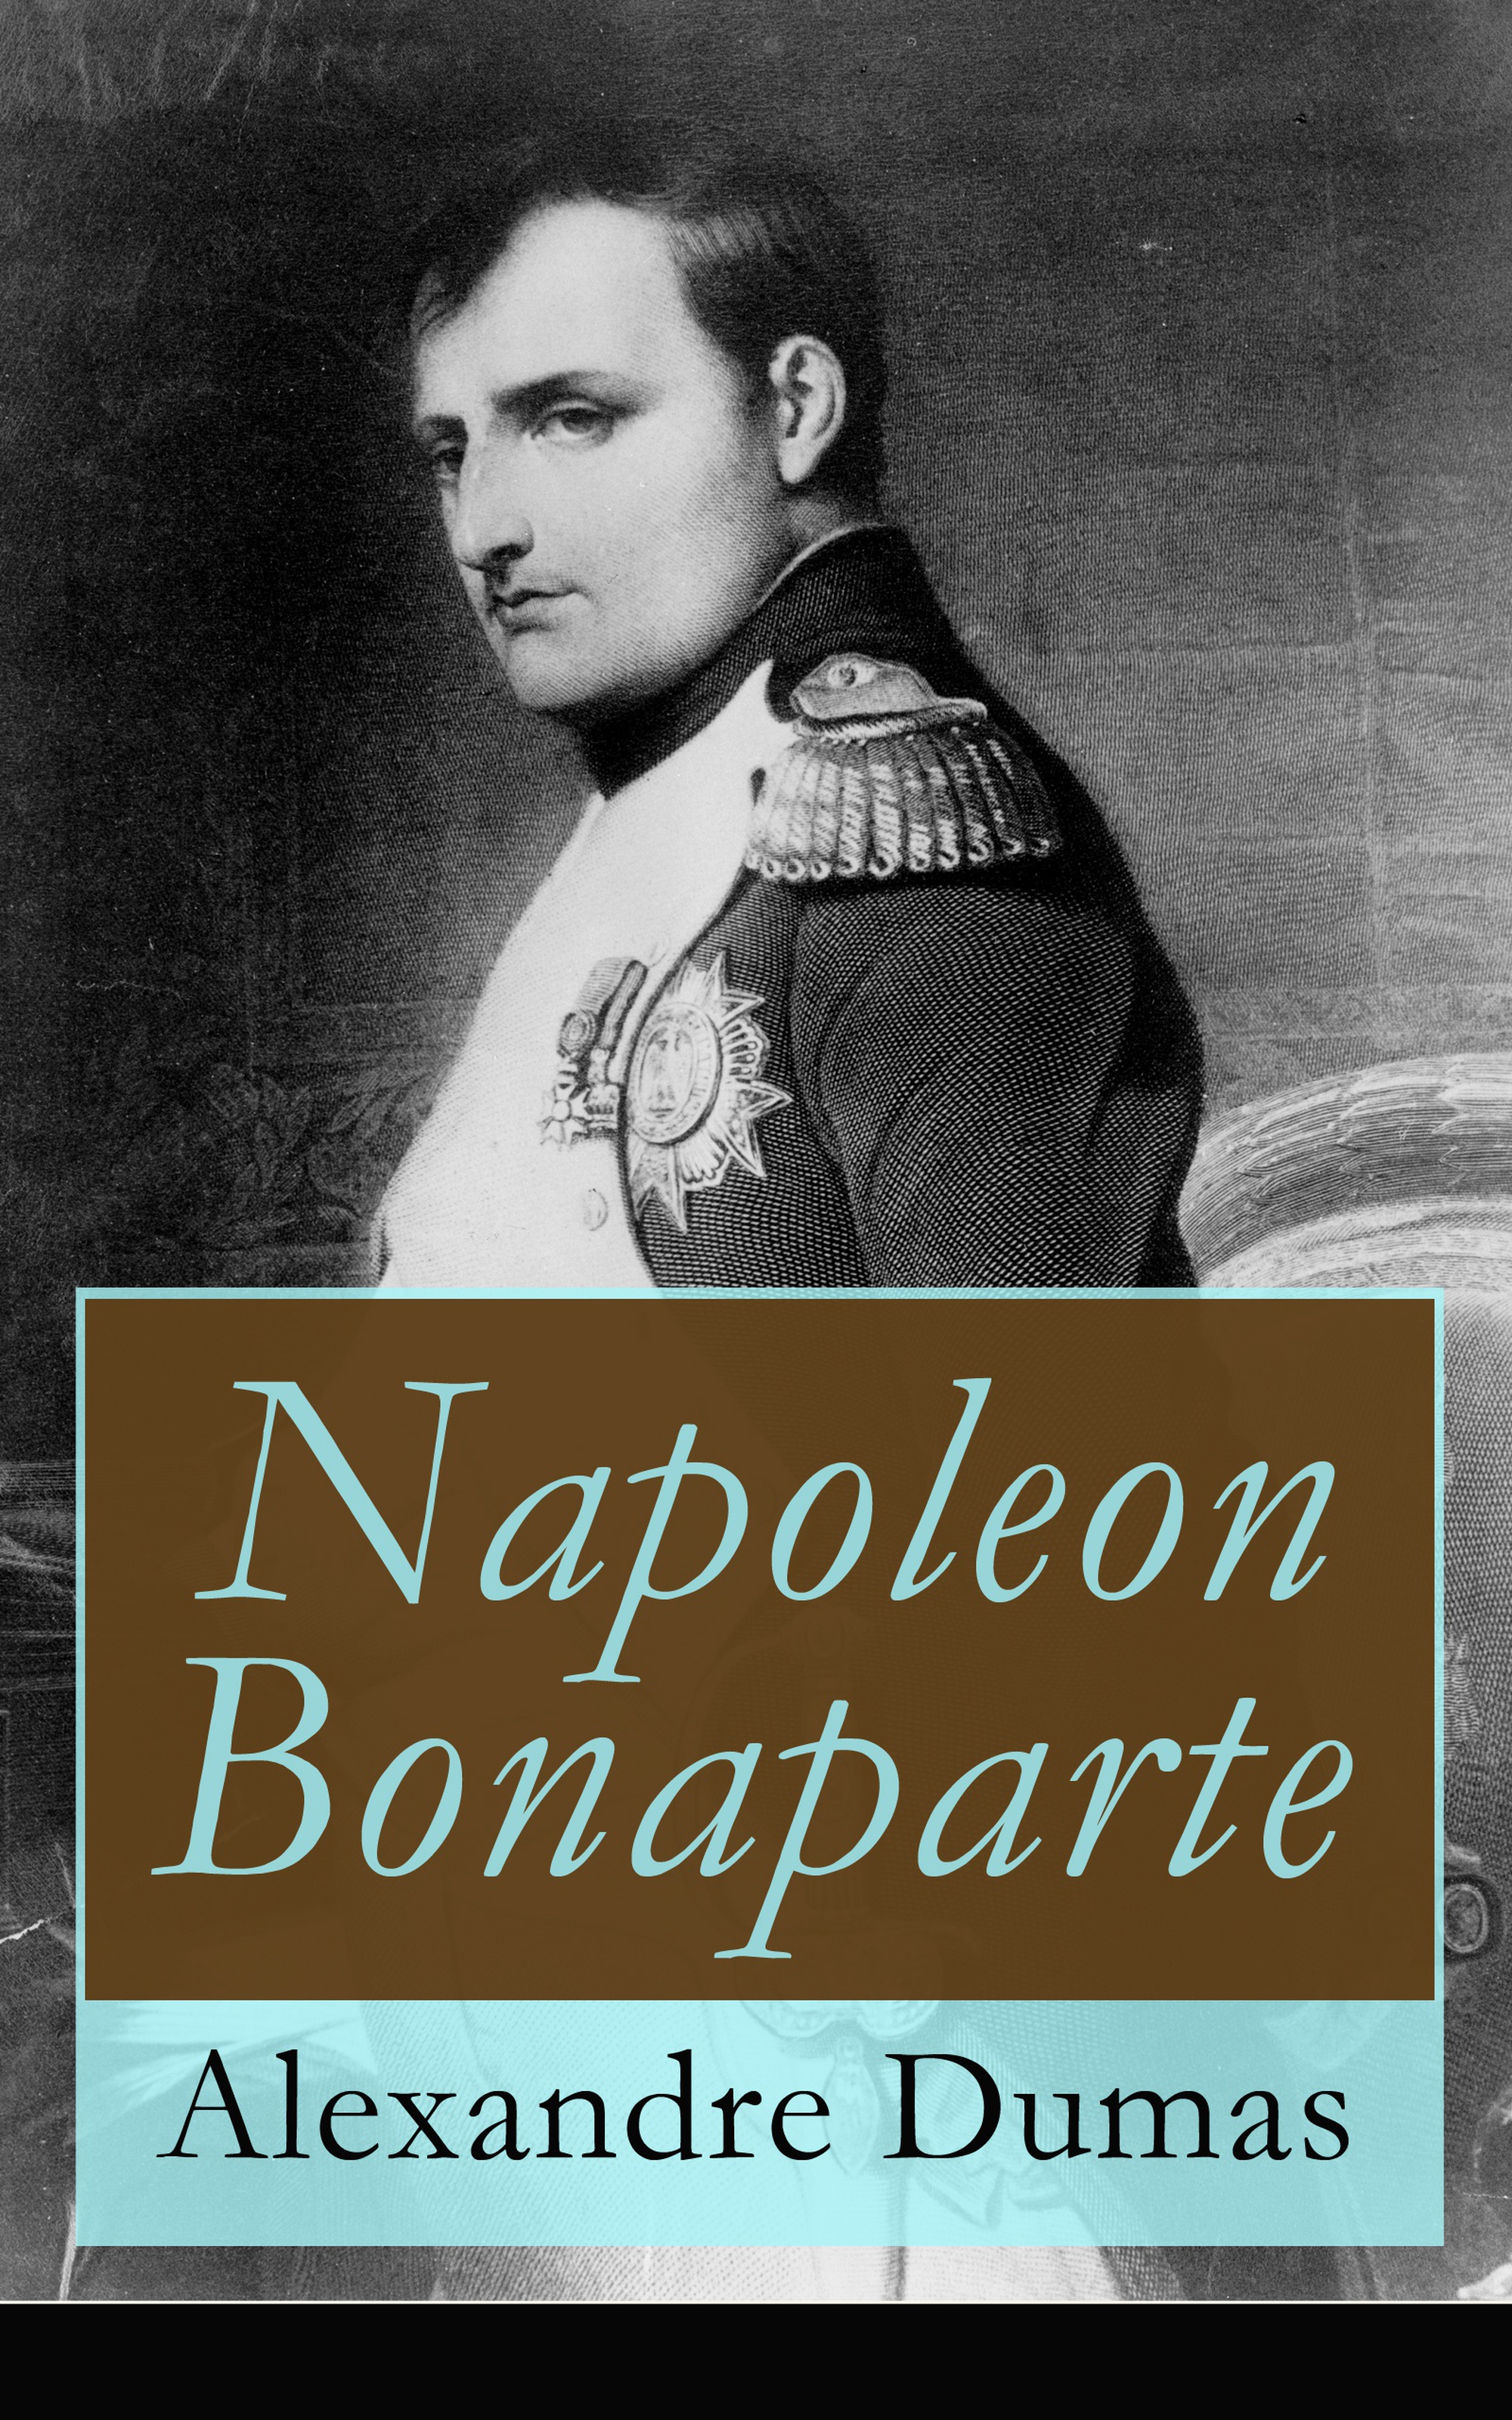 autobiography of napoleon bonaparte